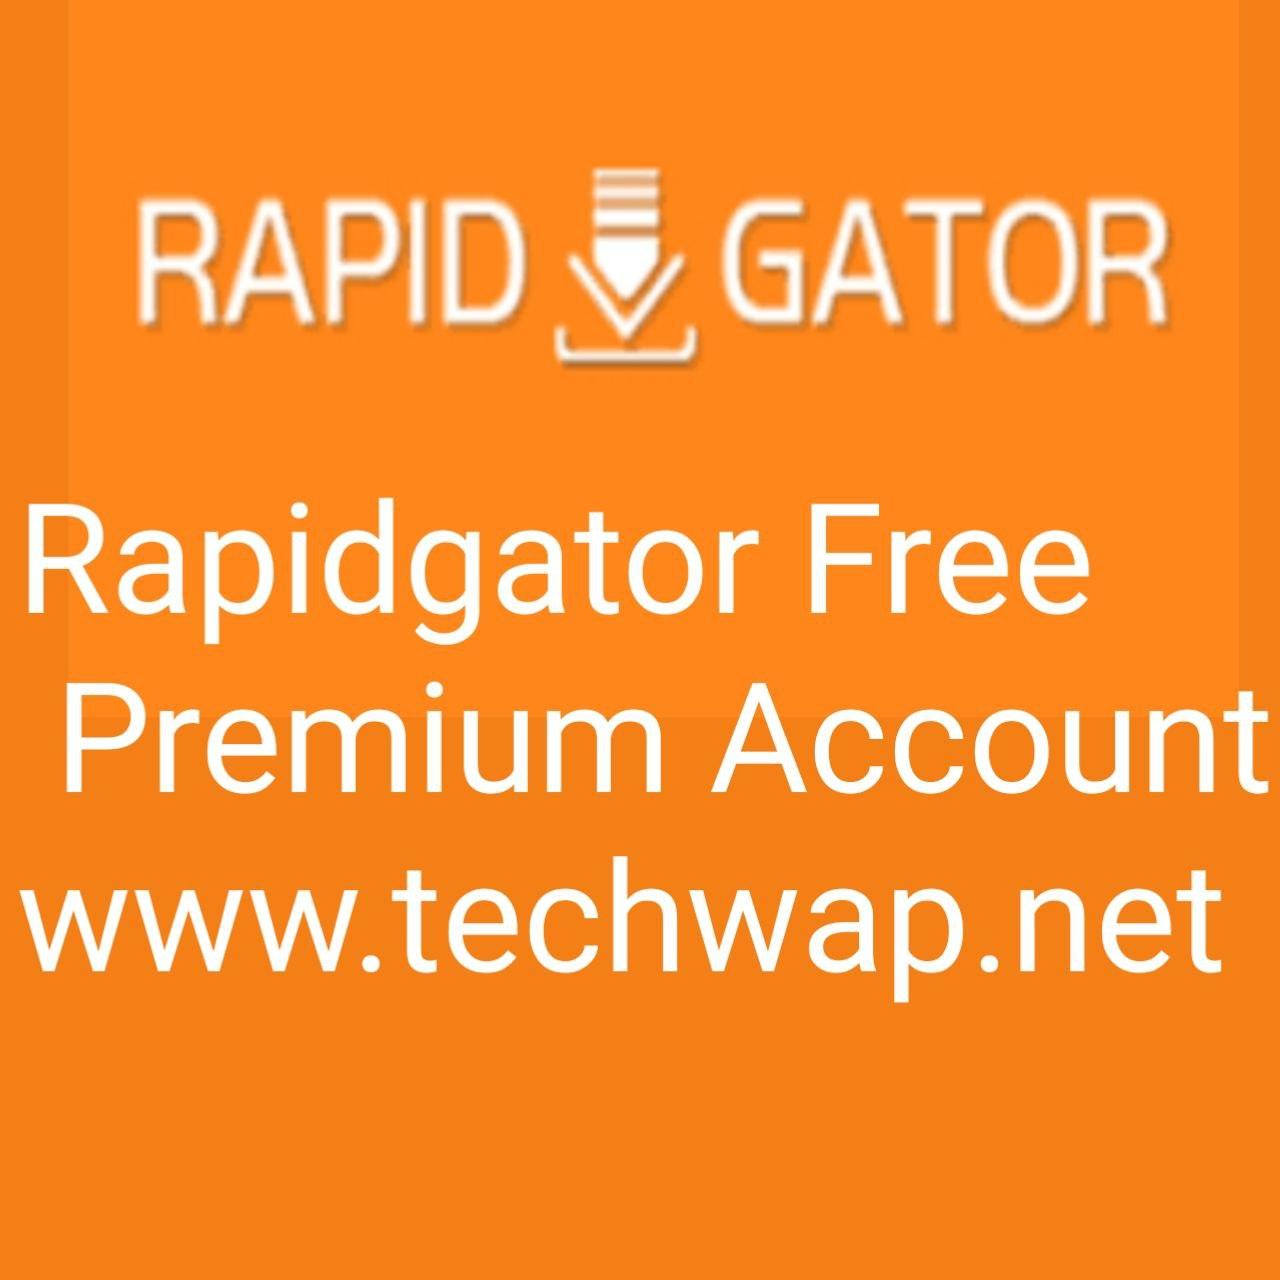 Down rapidgator net Solved: No